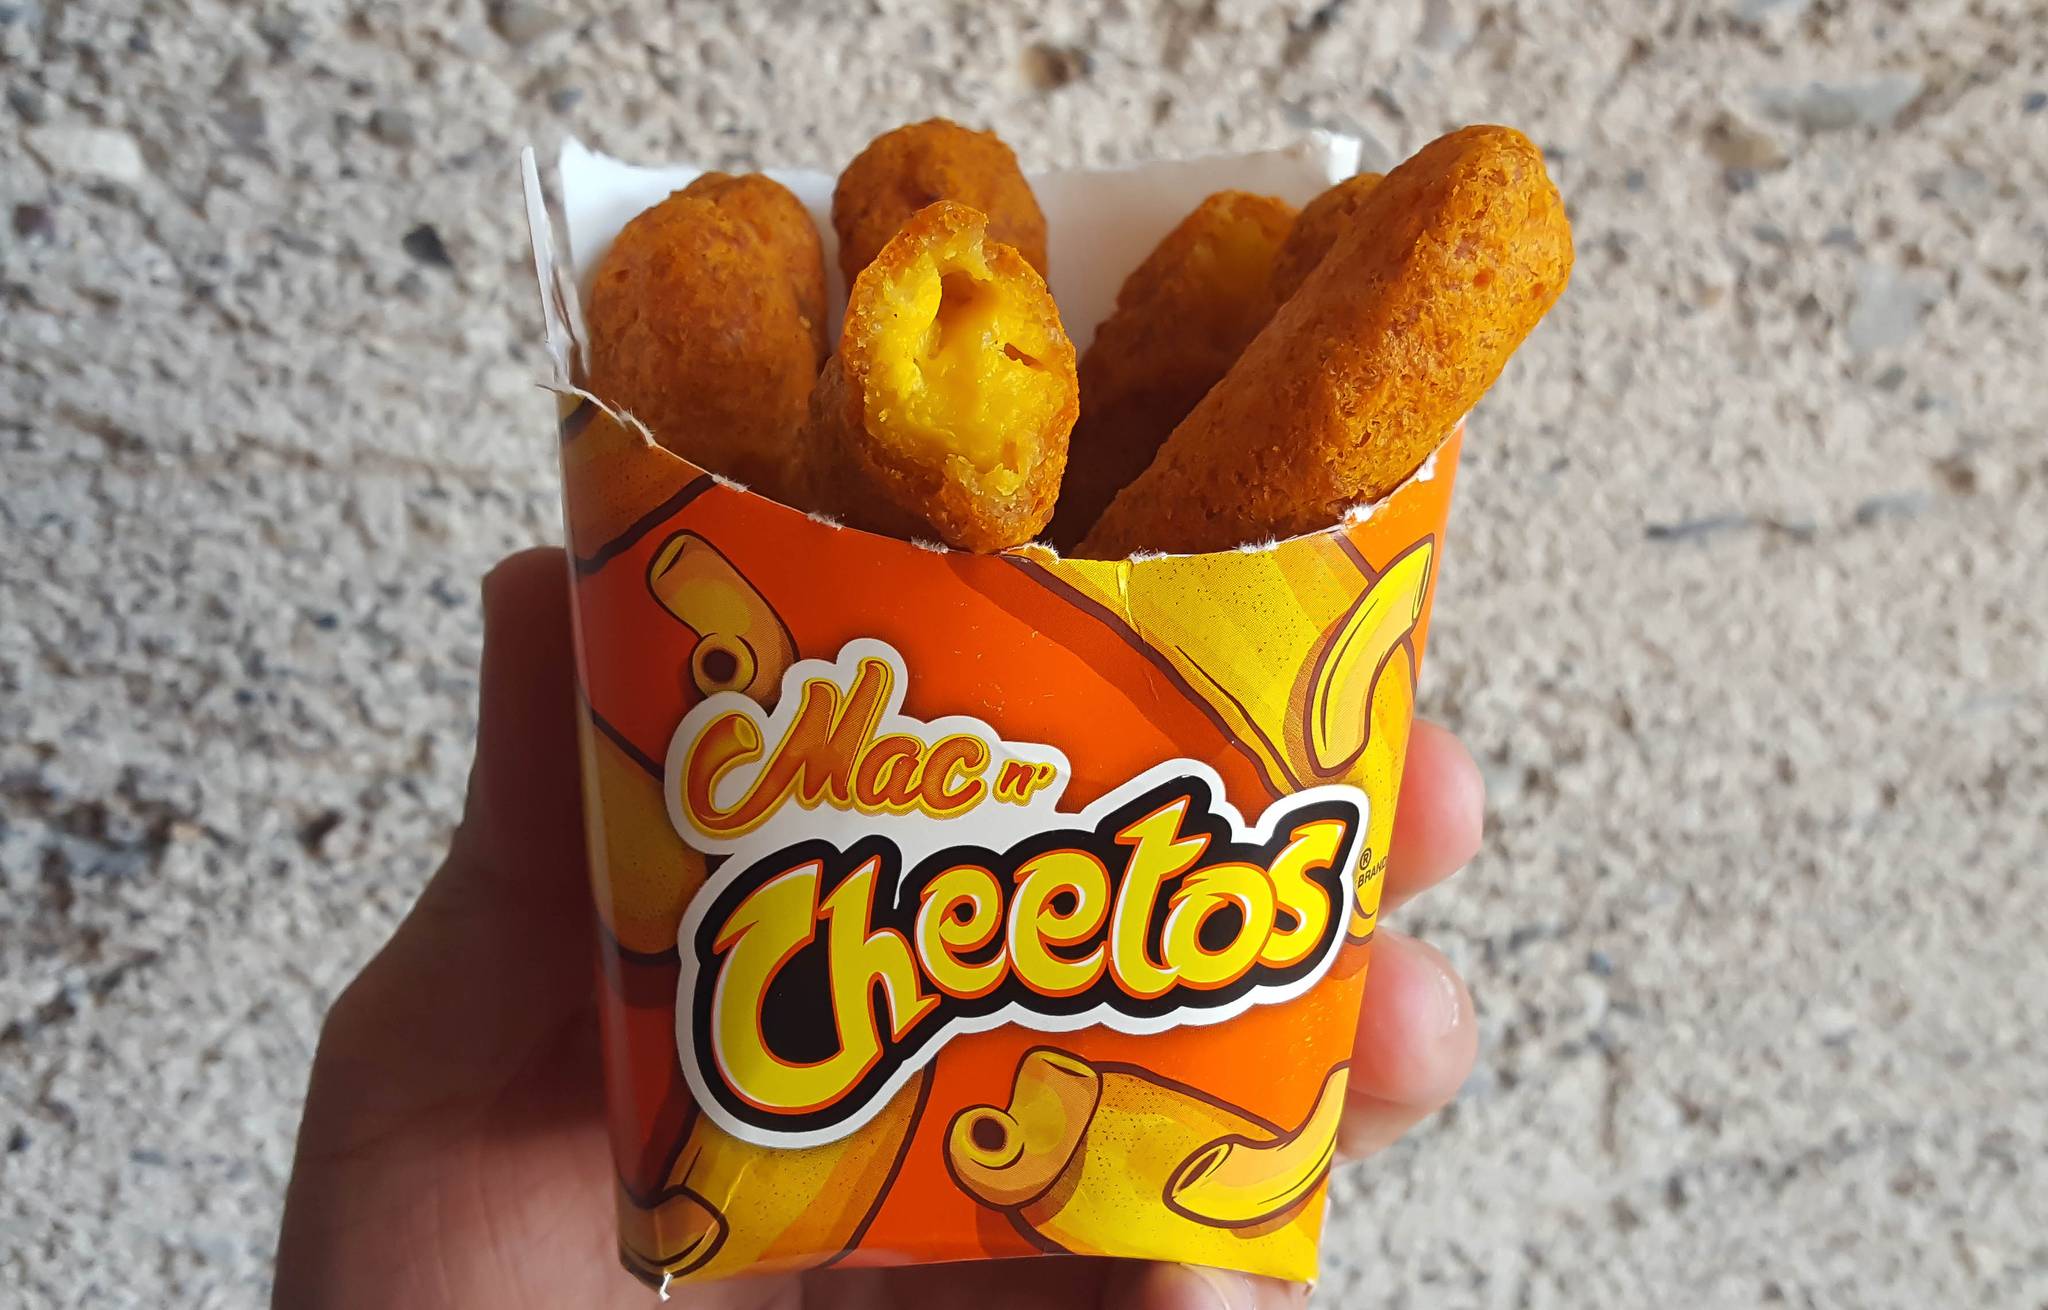 Mac ’n’ Cheetos taps into America’s childhood